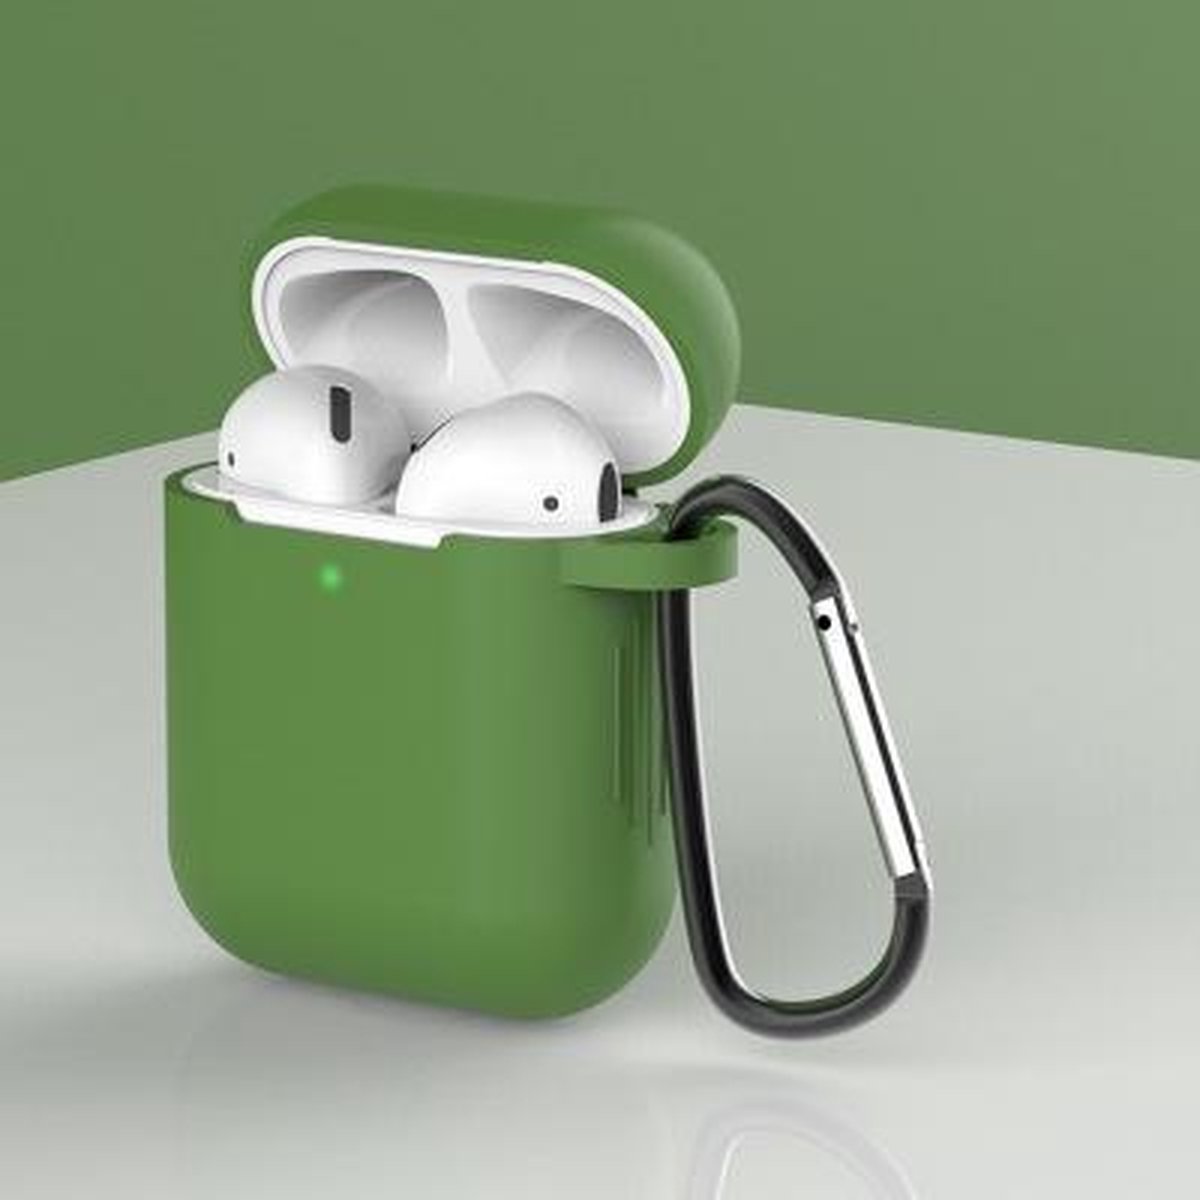 Apple AirPods 1/2 Hoesje + Clip in het Groen - Siliconen - Case - Cover - Soft case